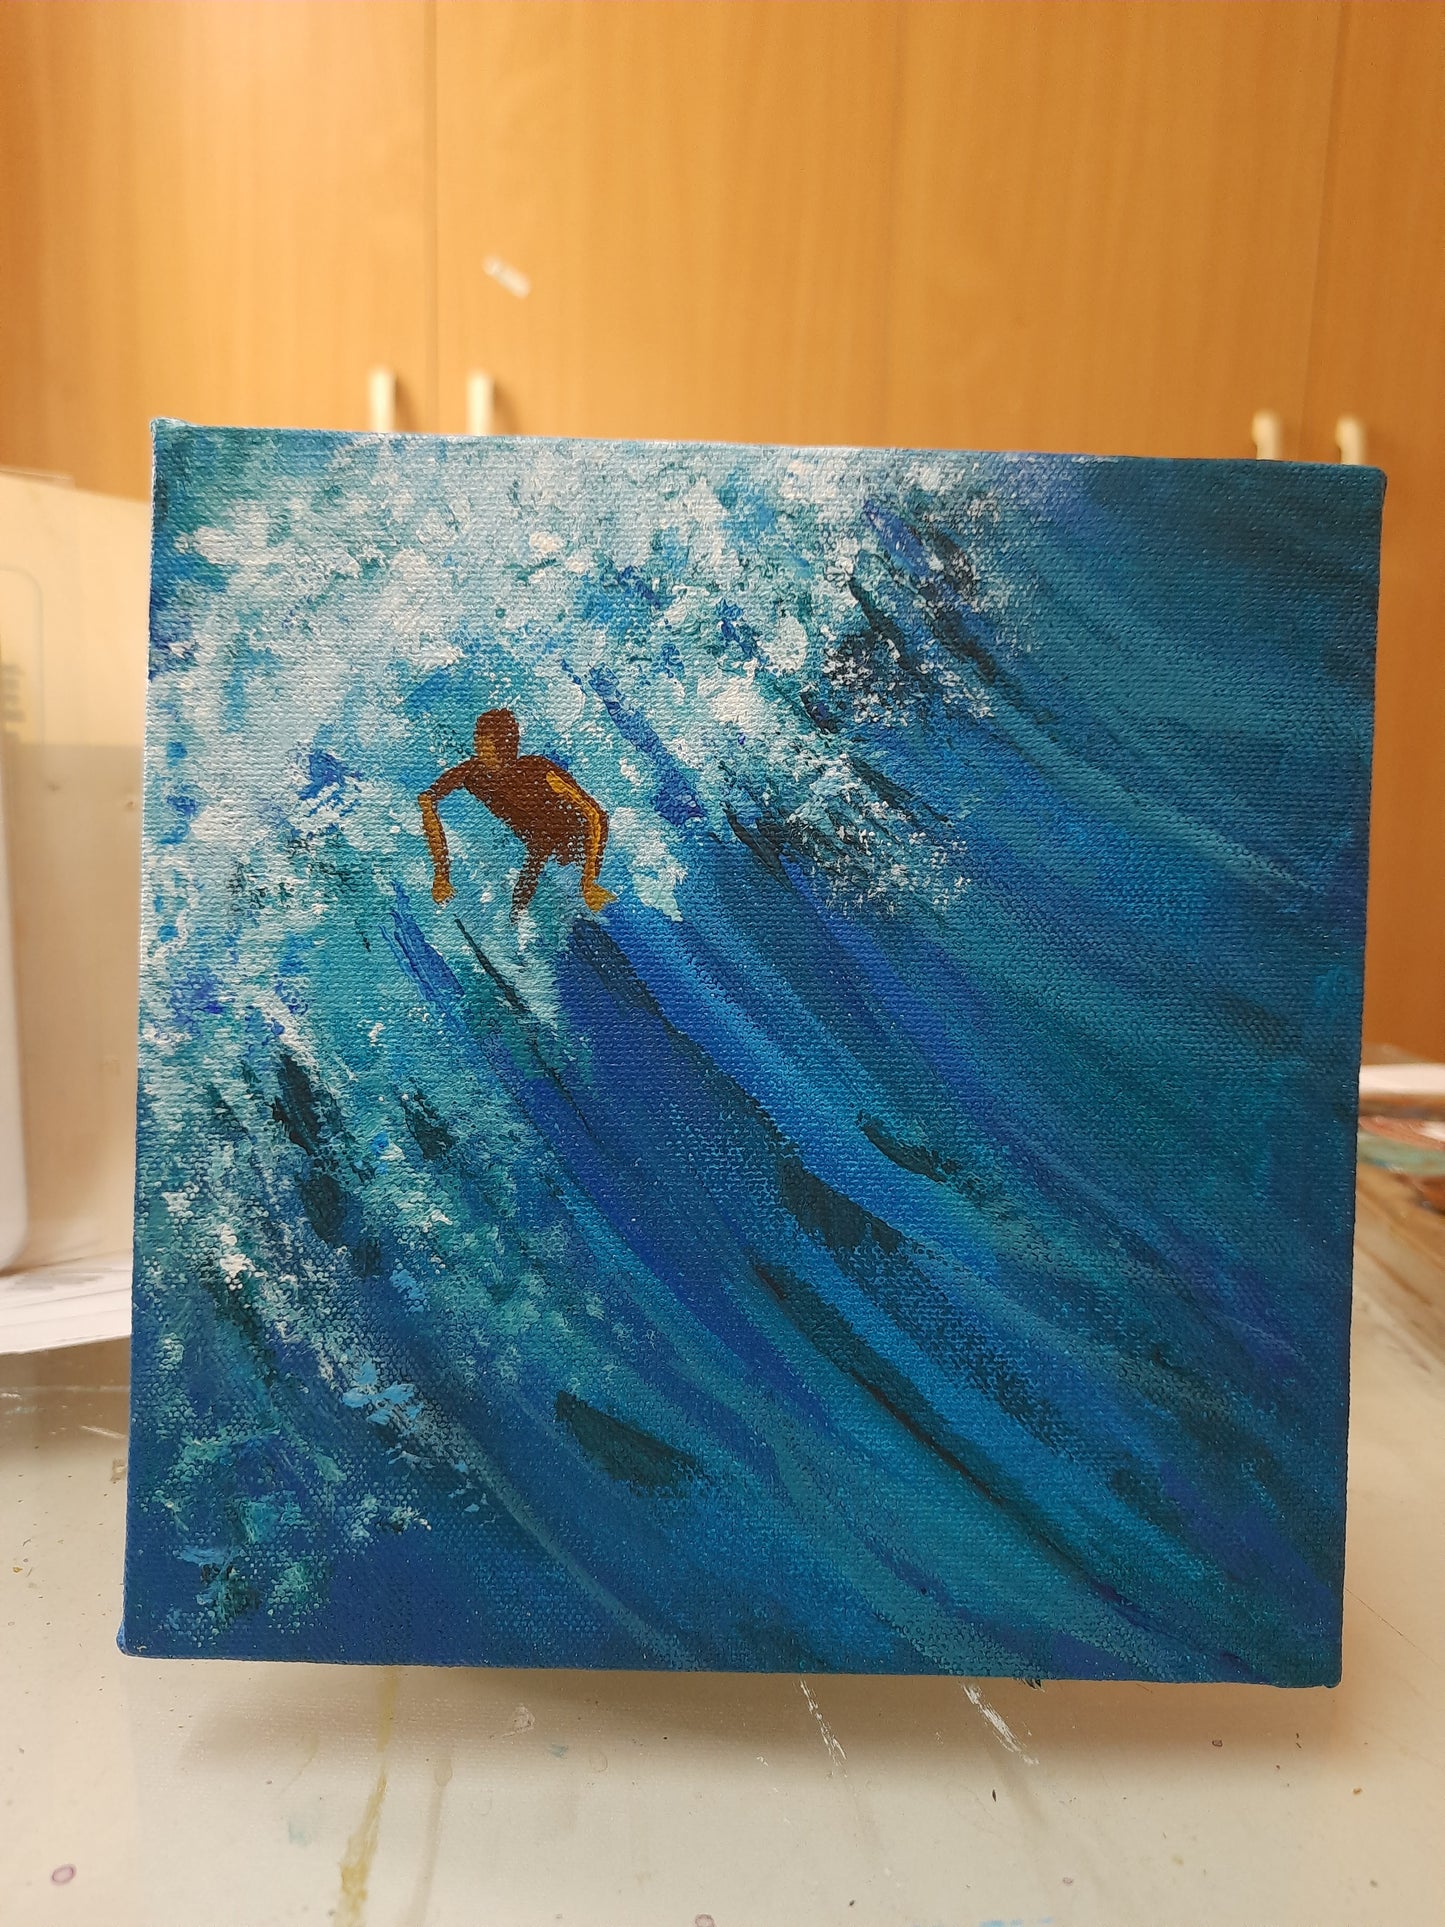 Work in progress surfer riding the ocean waves 